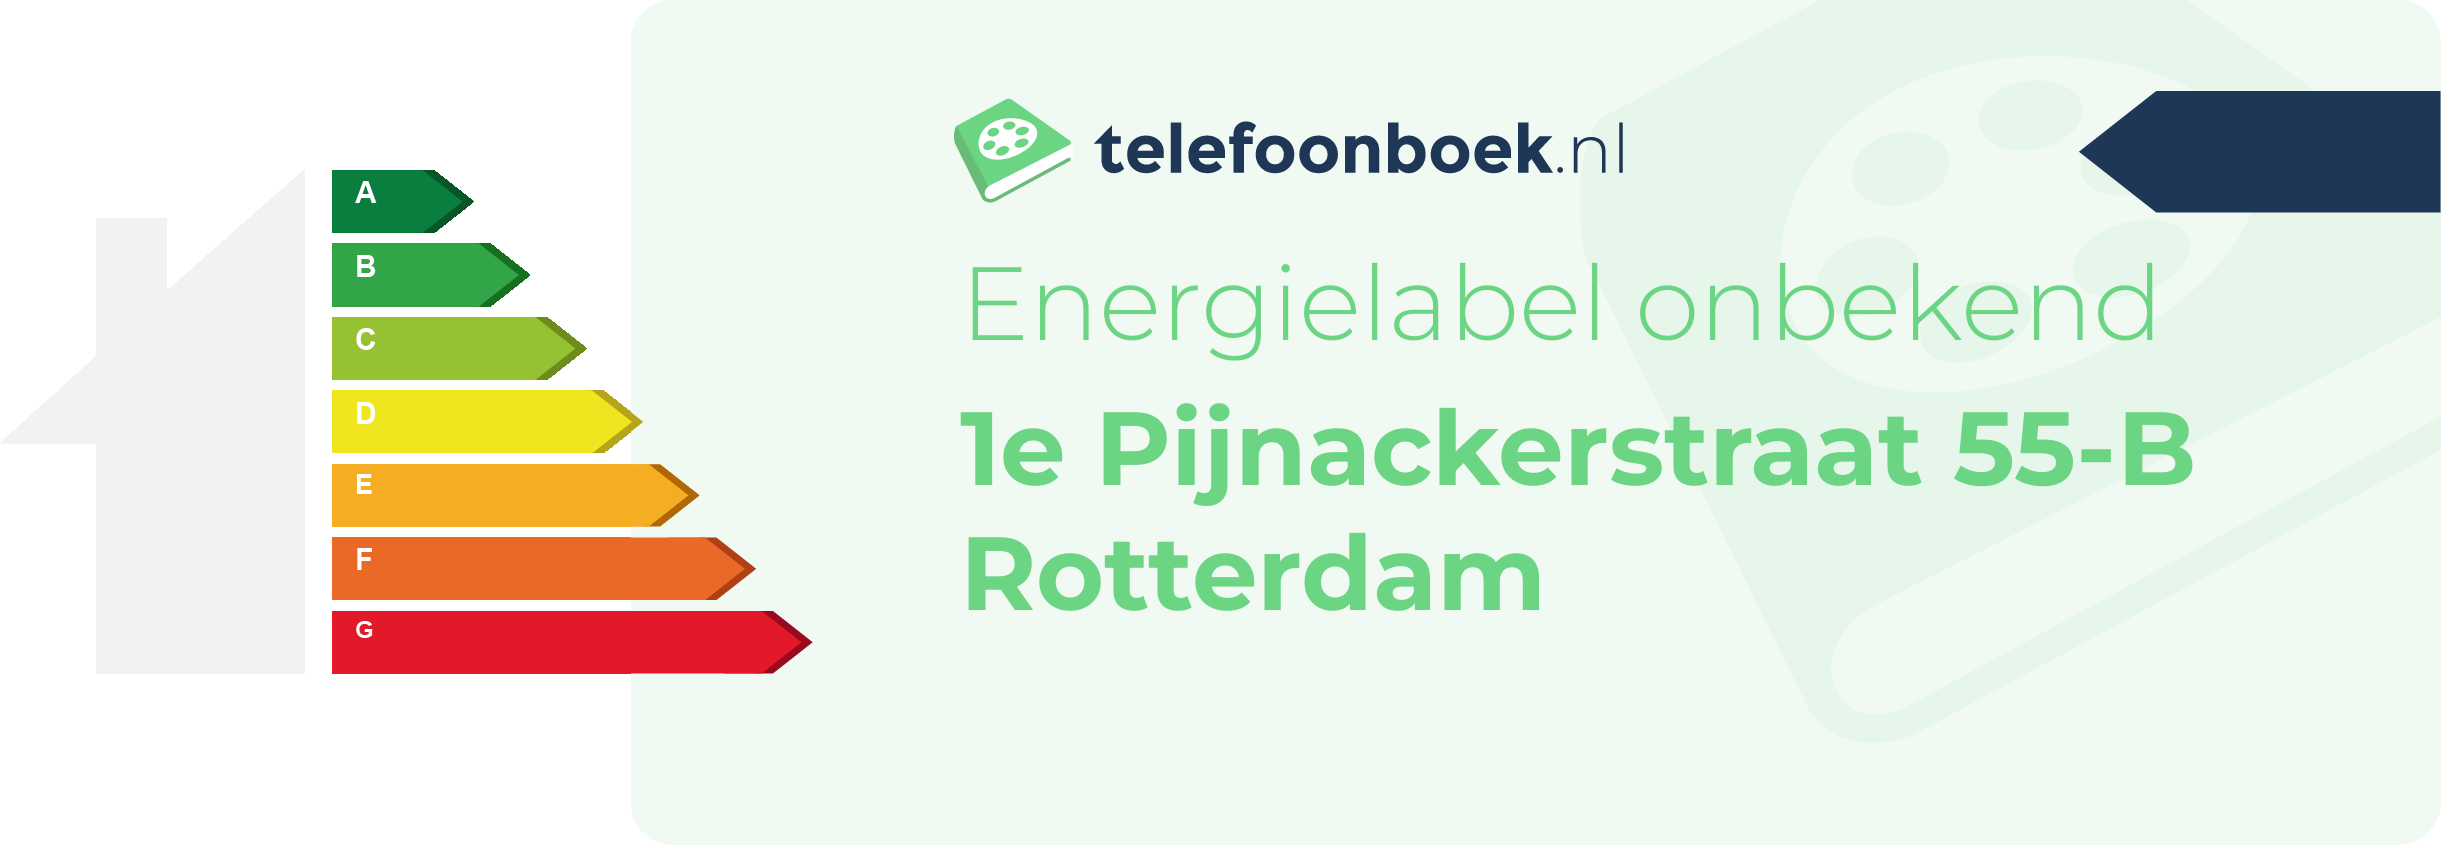 Energielabel 1e Pijnackerstraat 55-B Rotterdam